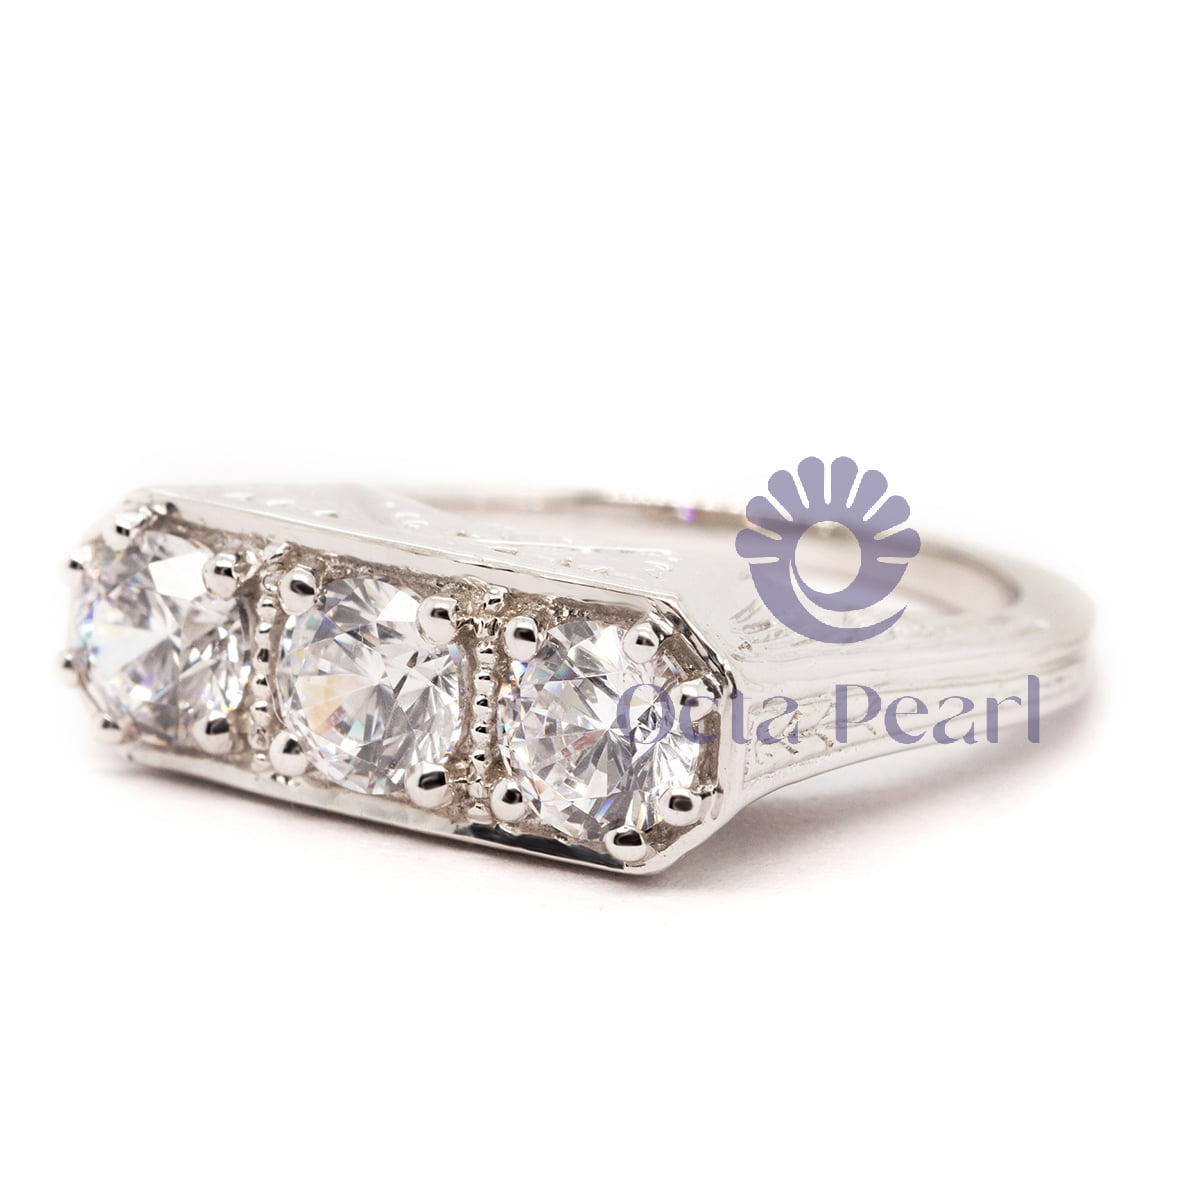 Art Deco inspired Vintage Engagement Ring